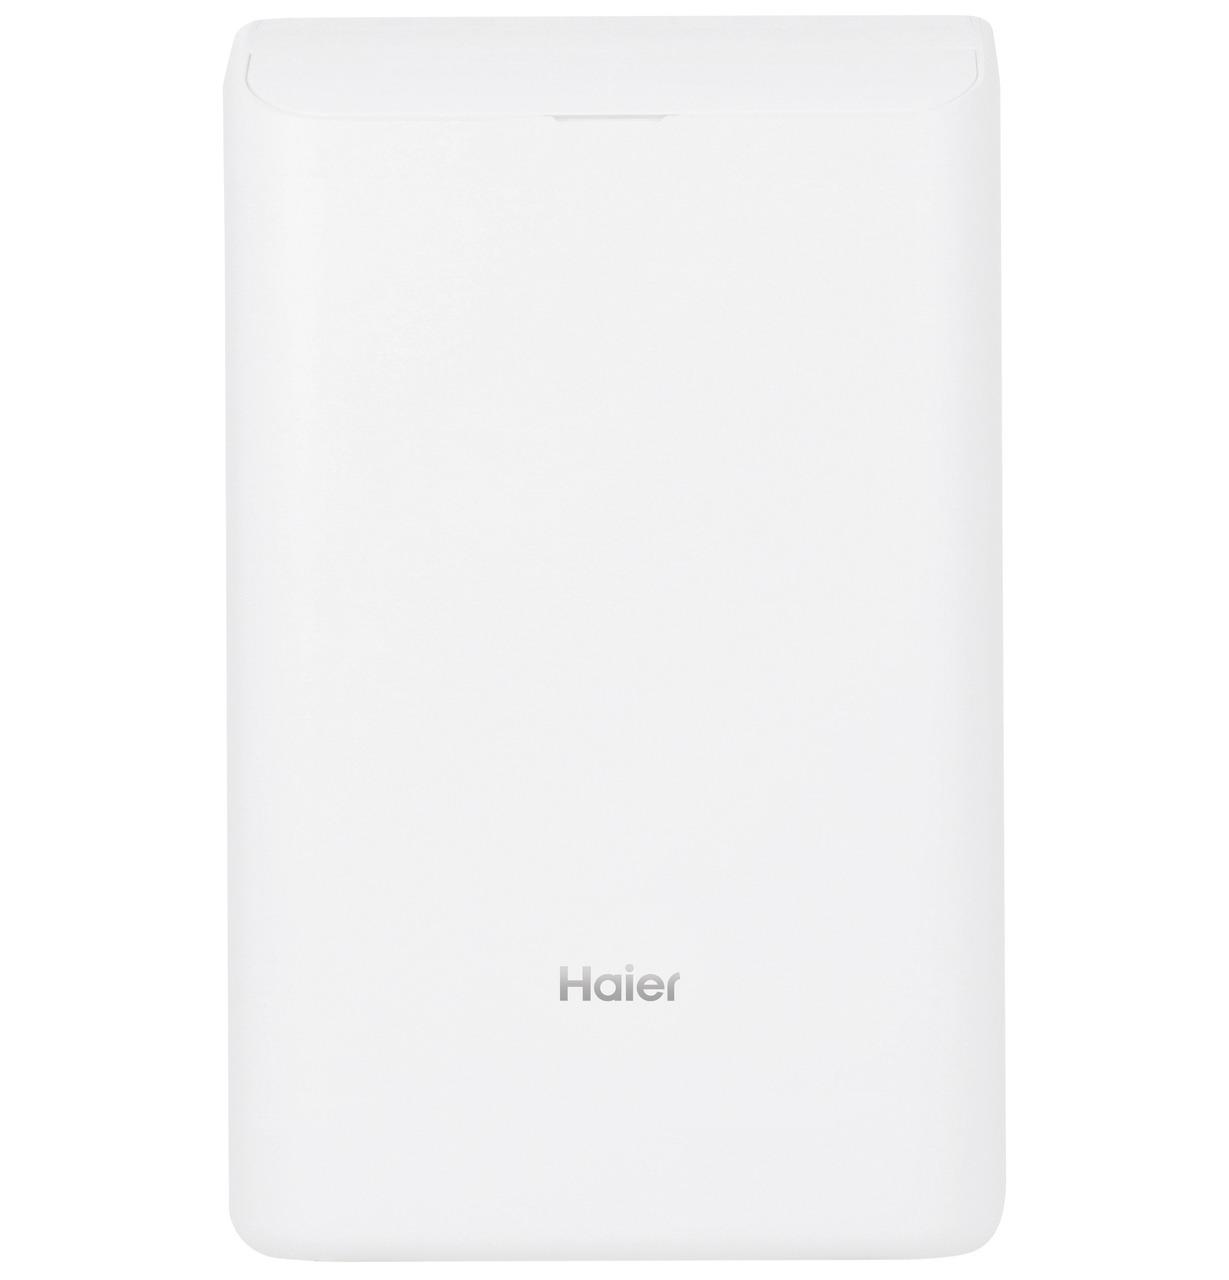 Haier QPCA11YBMW Haier 11,000 Btu Portable Air Conditioner For Medium Rooms Up To 450 Sq Ft. (7,800 Btu Sacc)